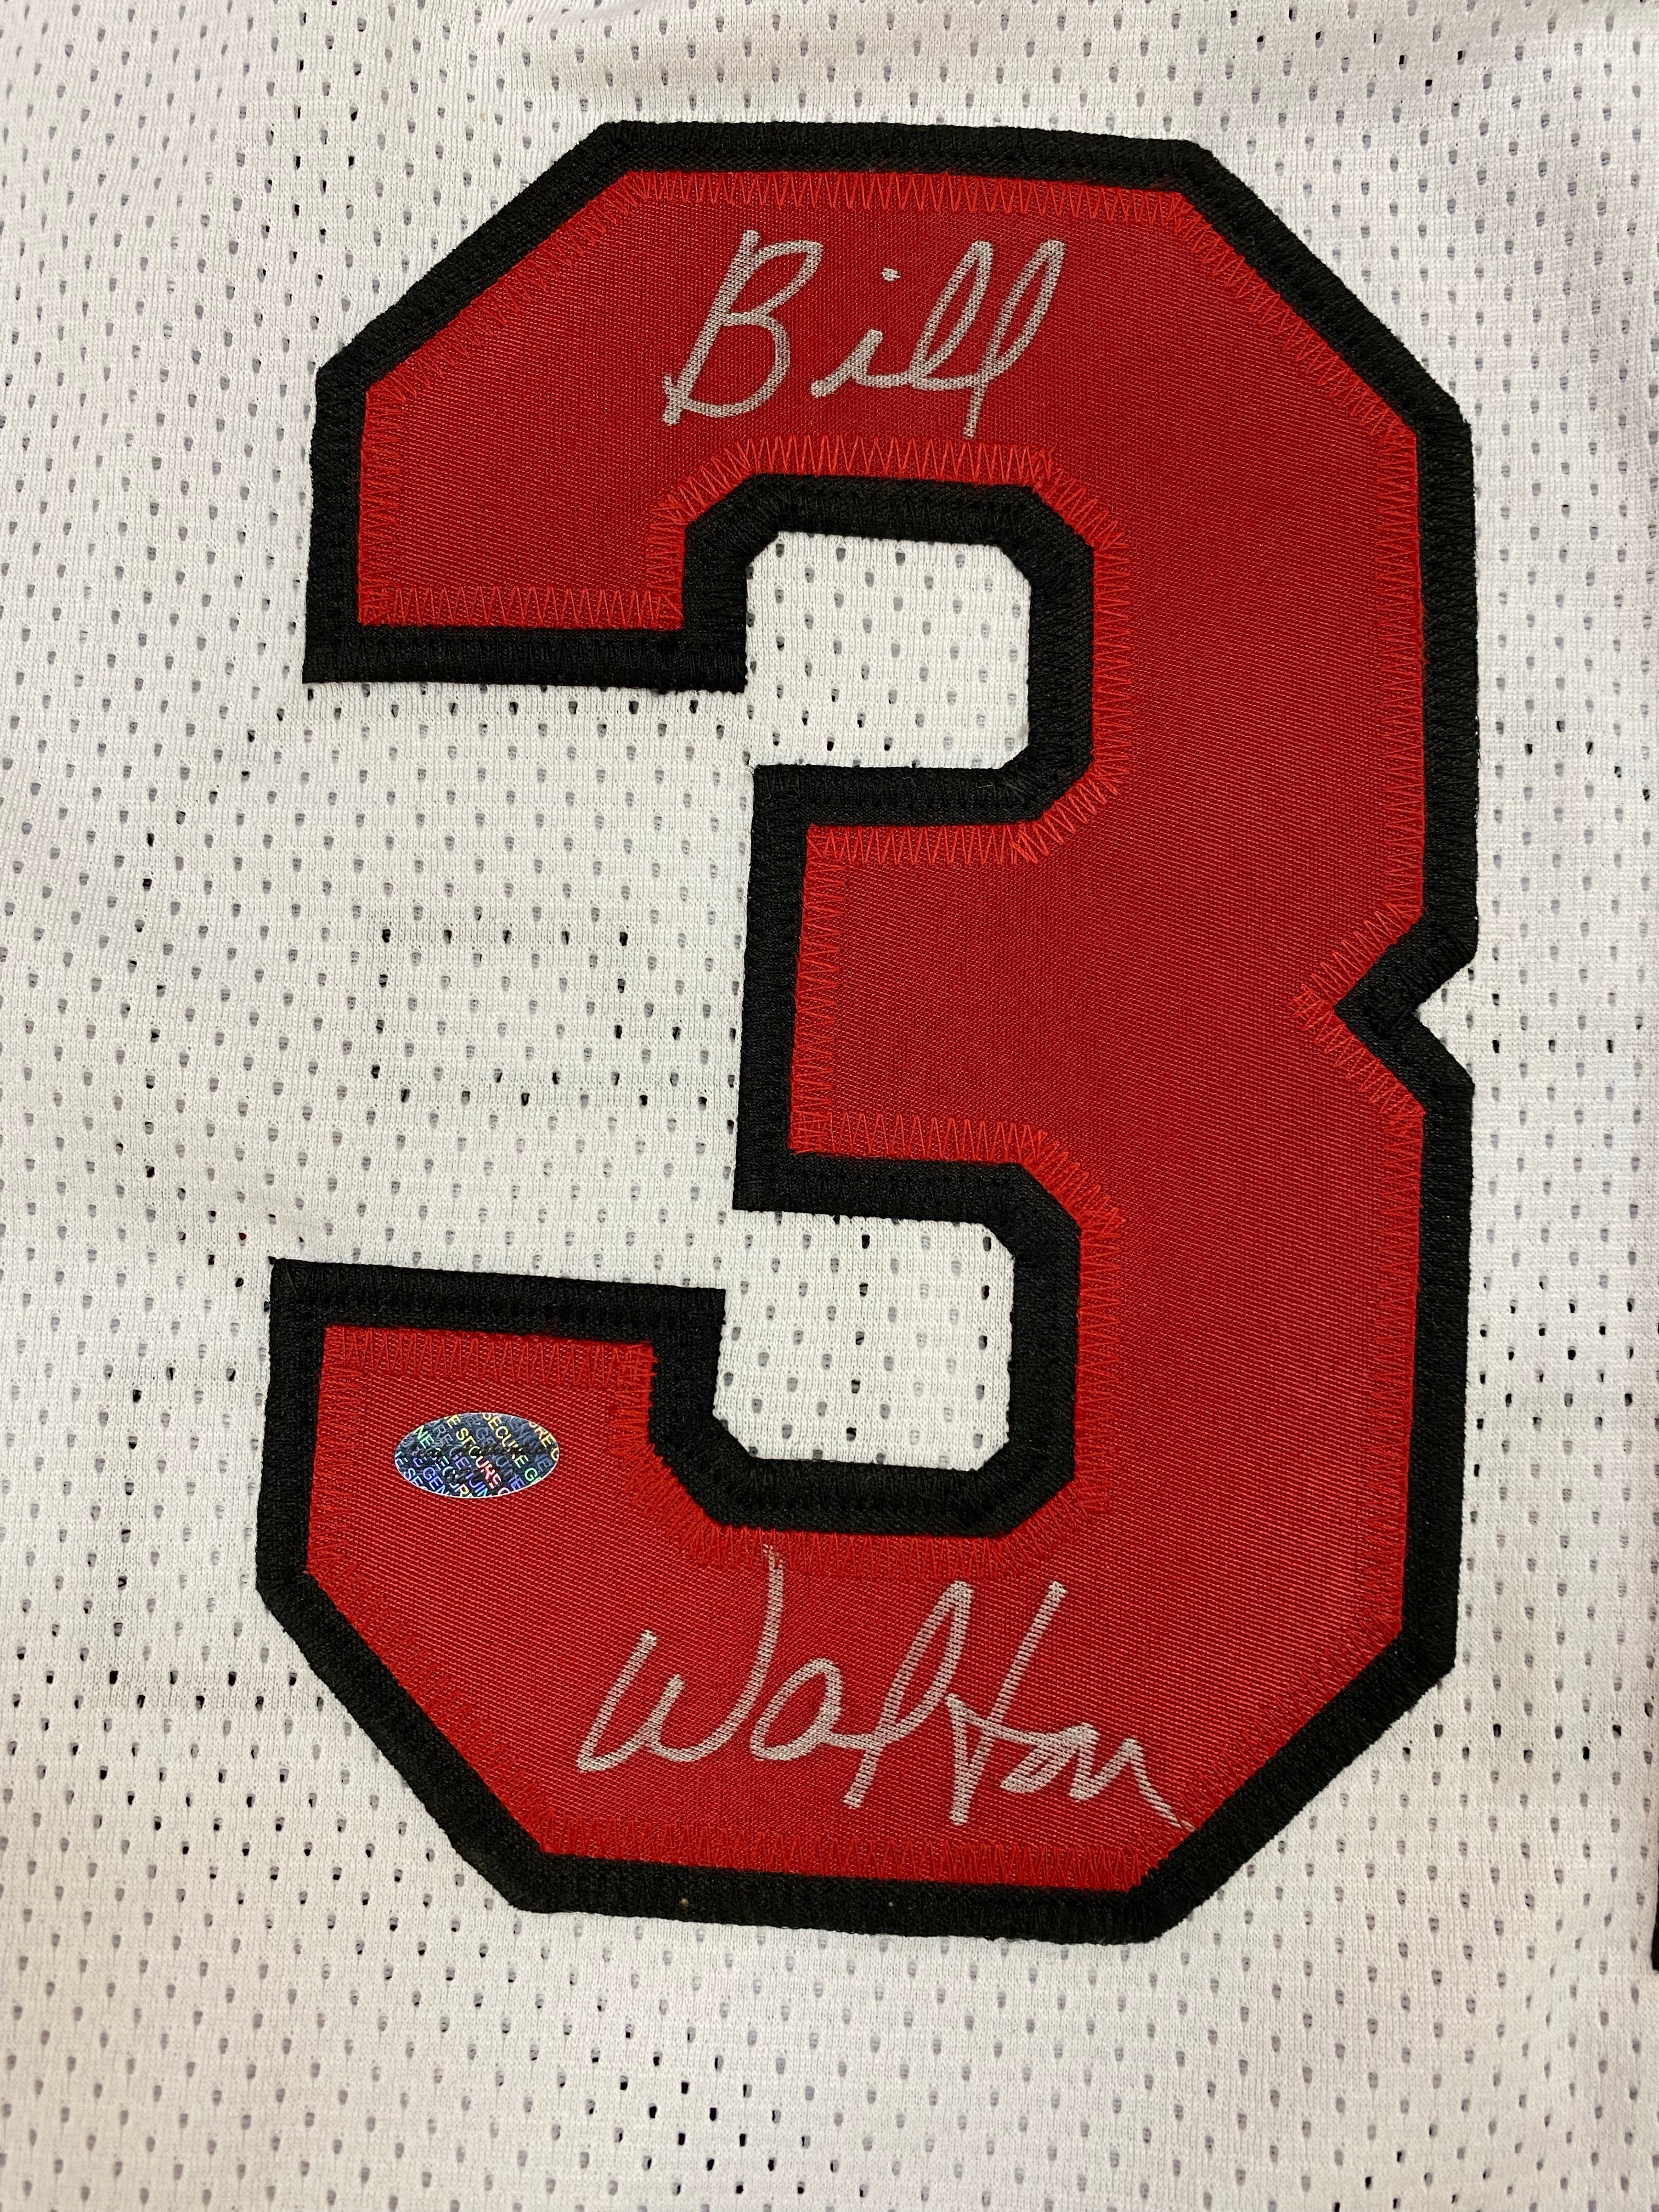 Bill Walton Signed Portland Trail Blazers Jersey (Schwartz COA) NBA Ha –  Super Sports Center